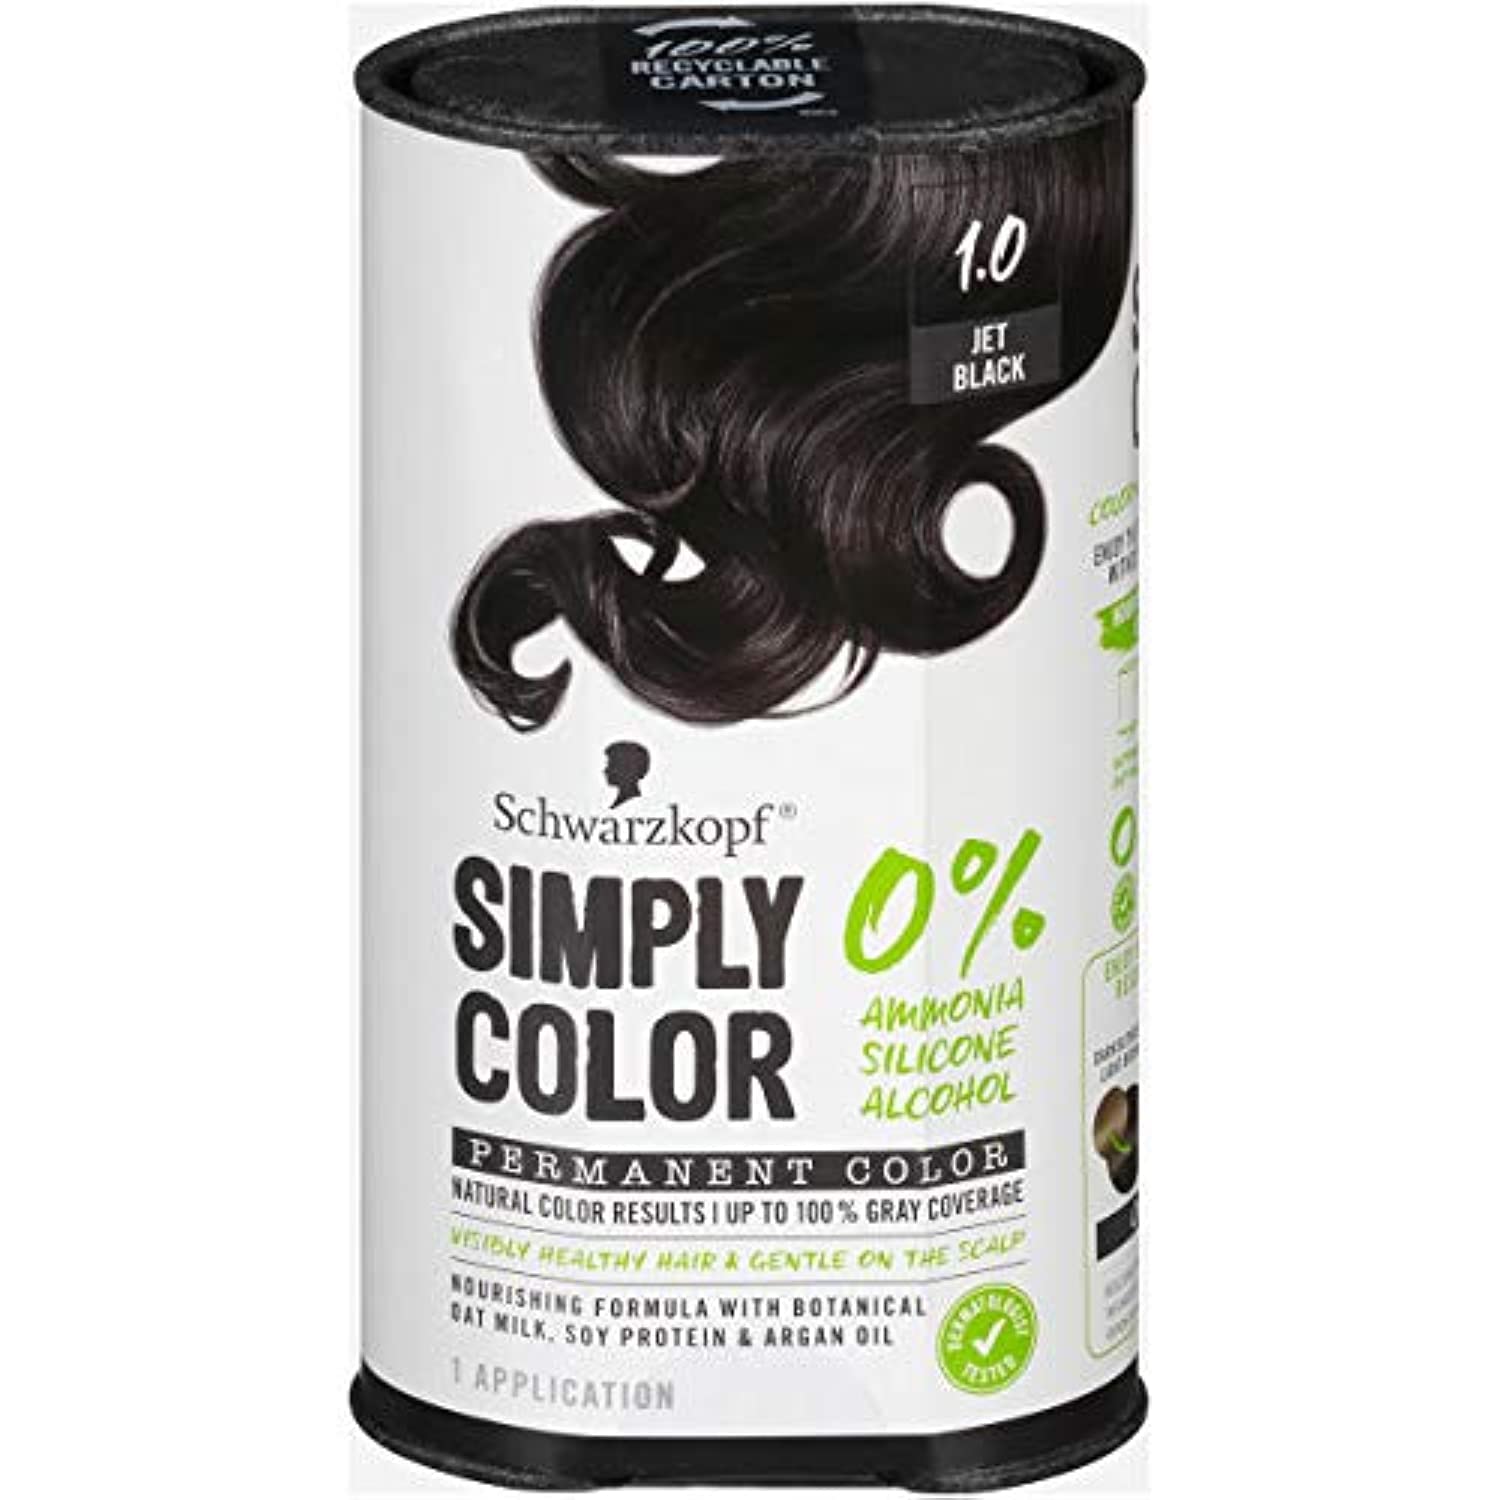 Schwarzkopf Simply Color Permanent Hair Color, 1.0 Jet Black